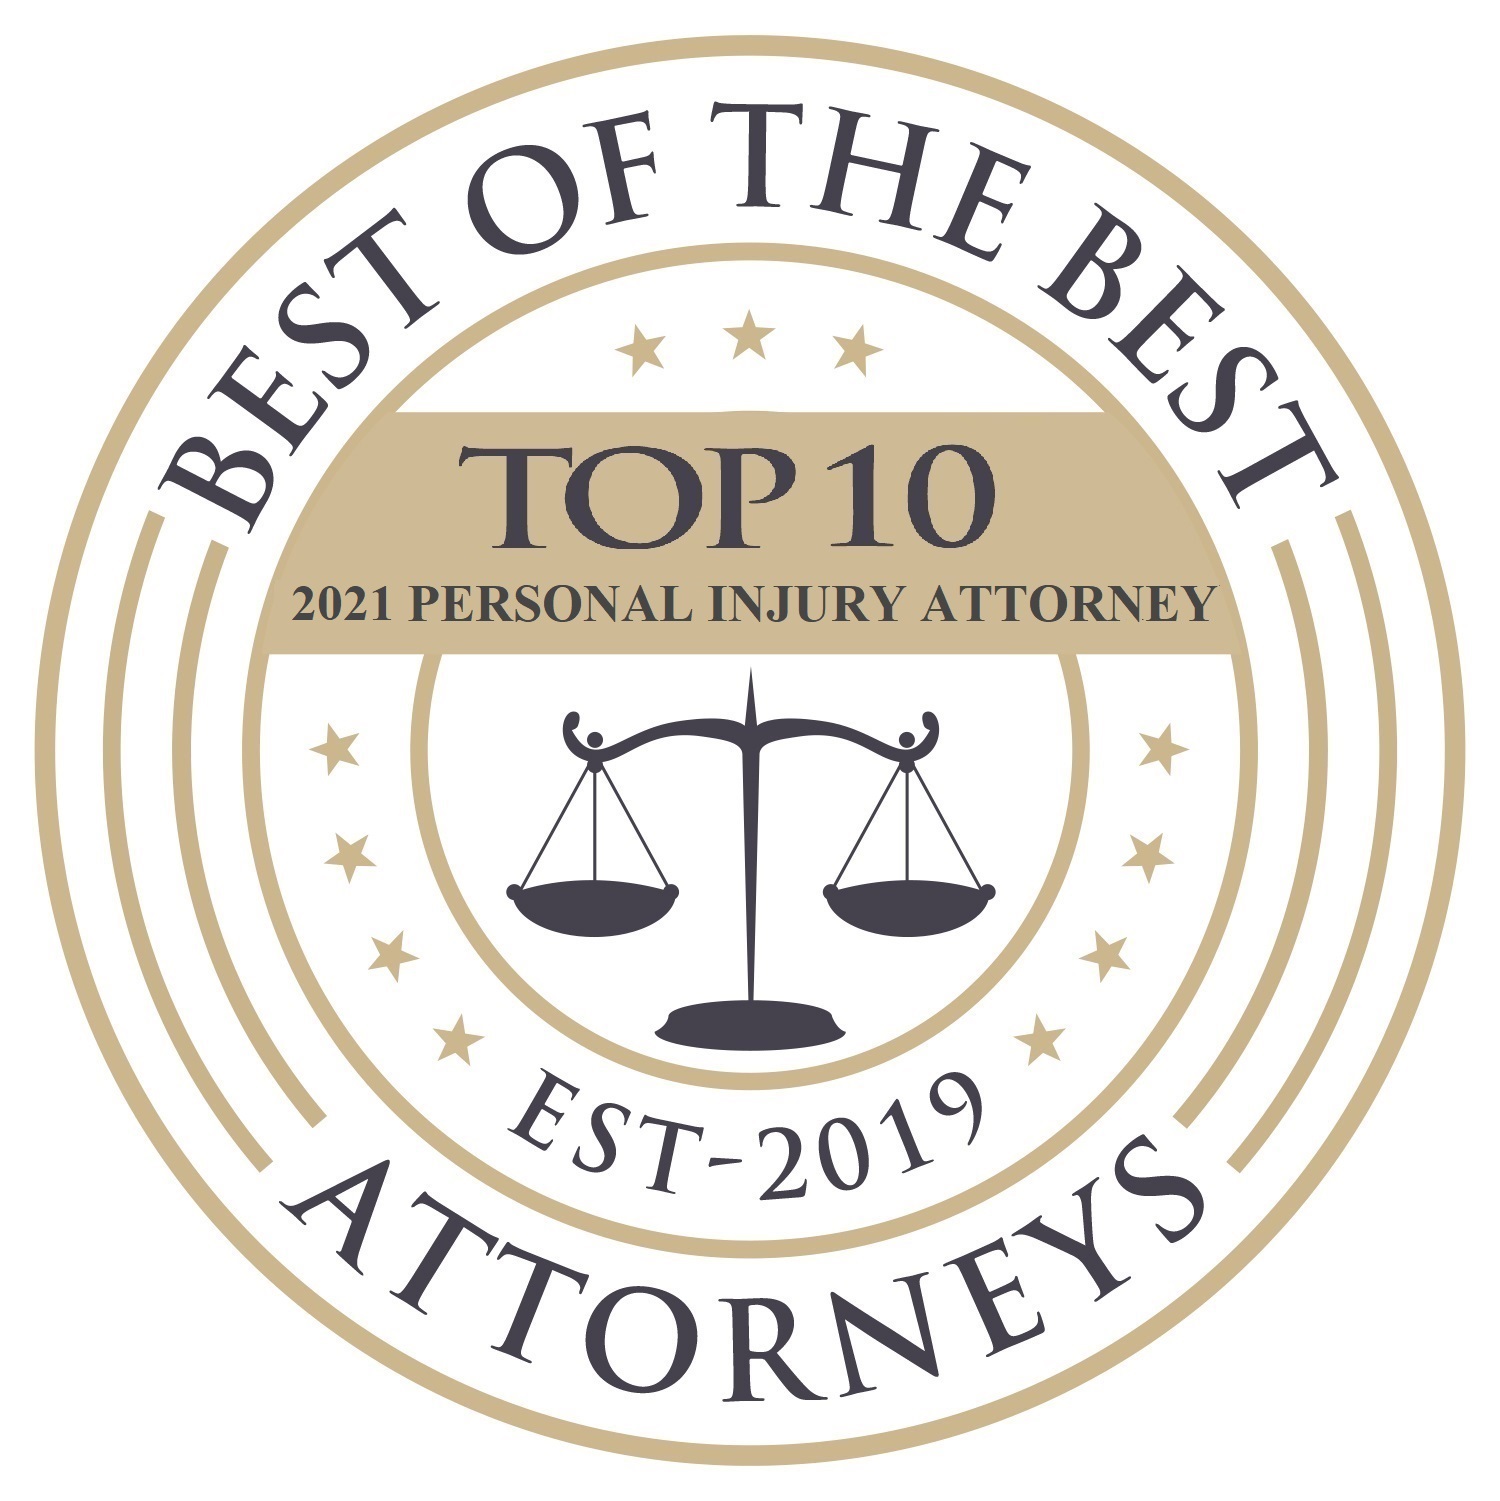 2020 Best Attorney Client Satisfaction